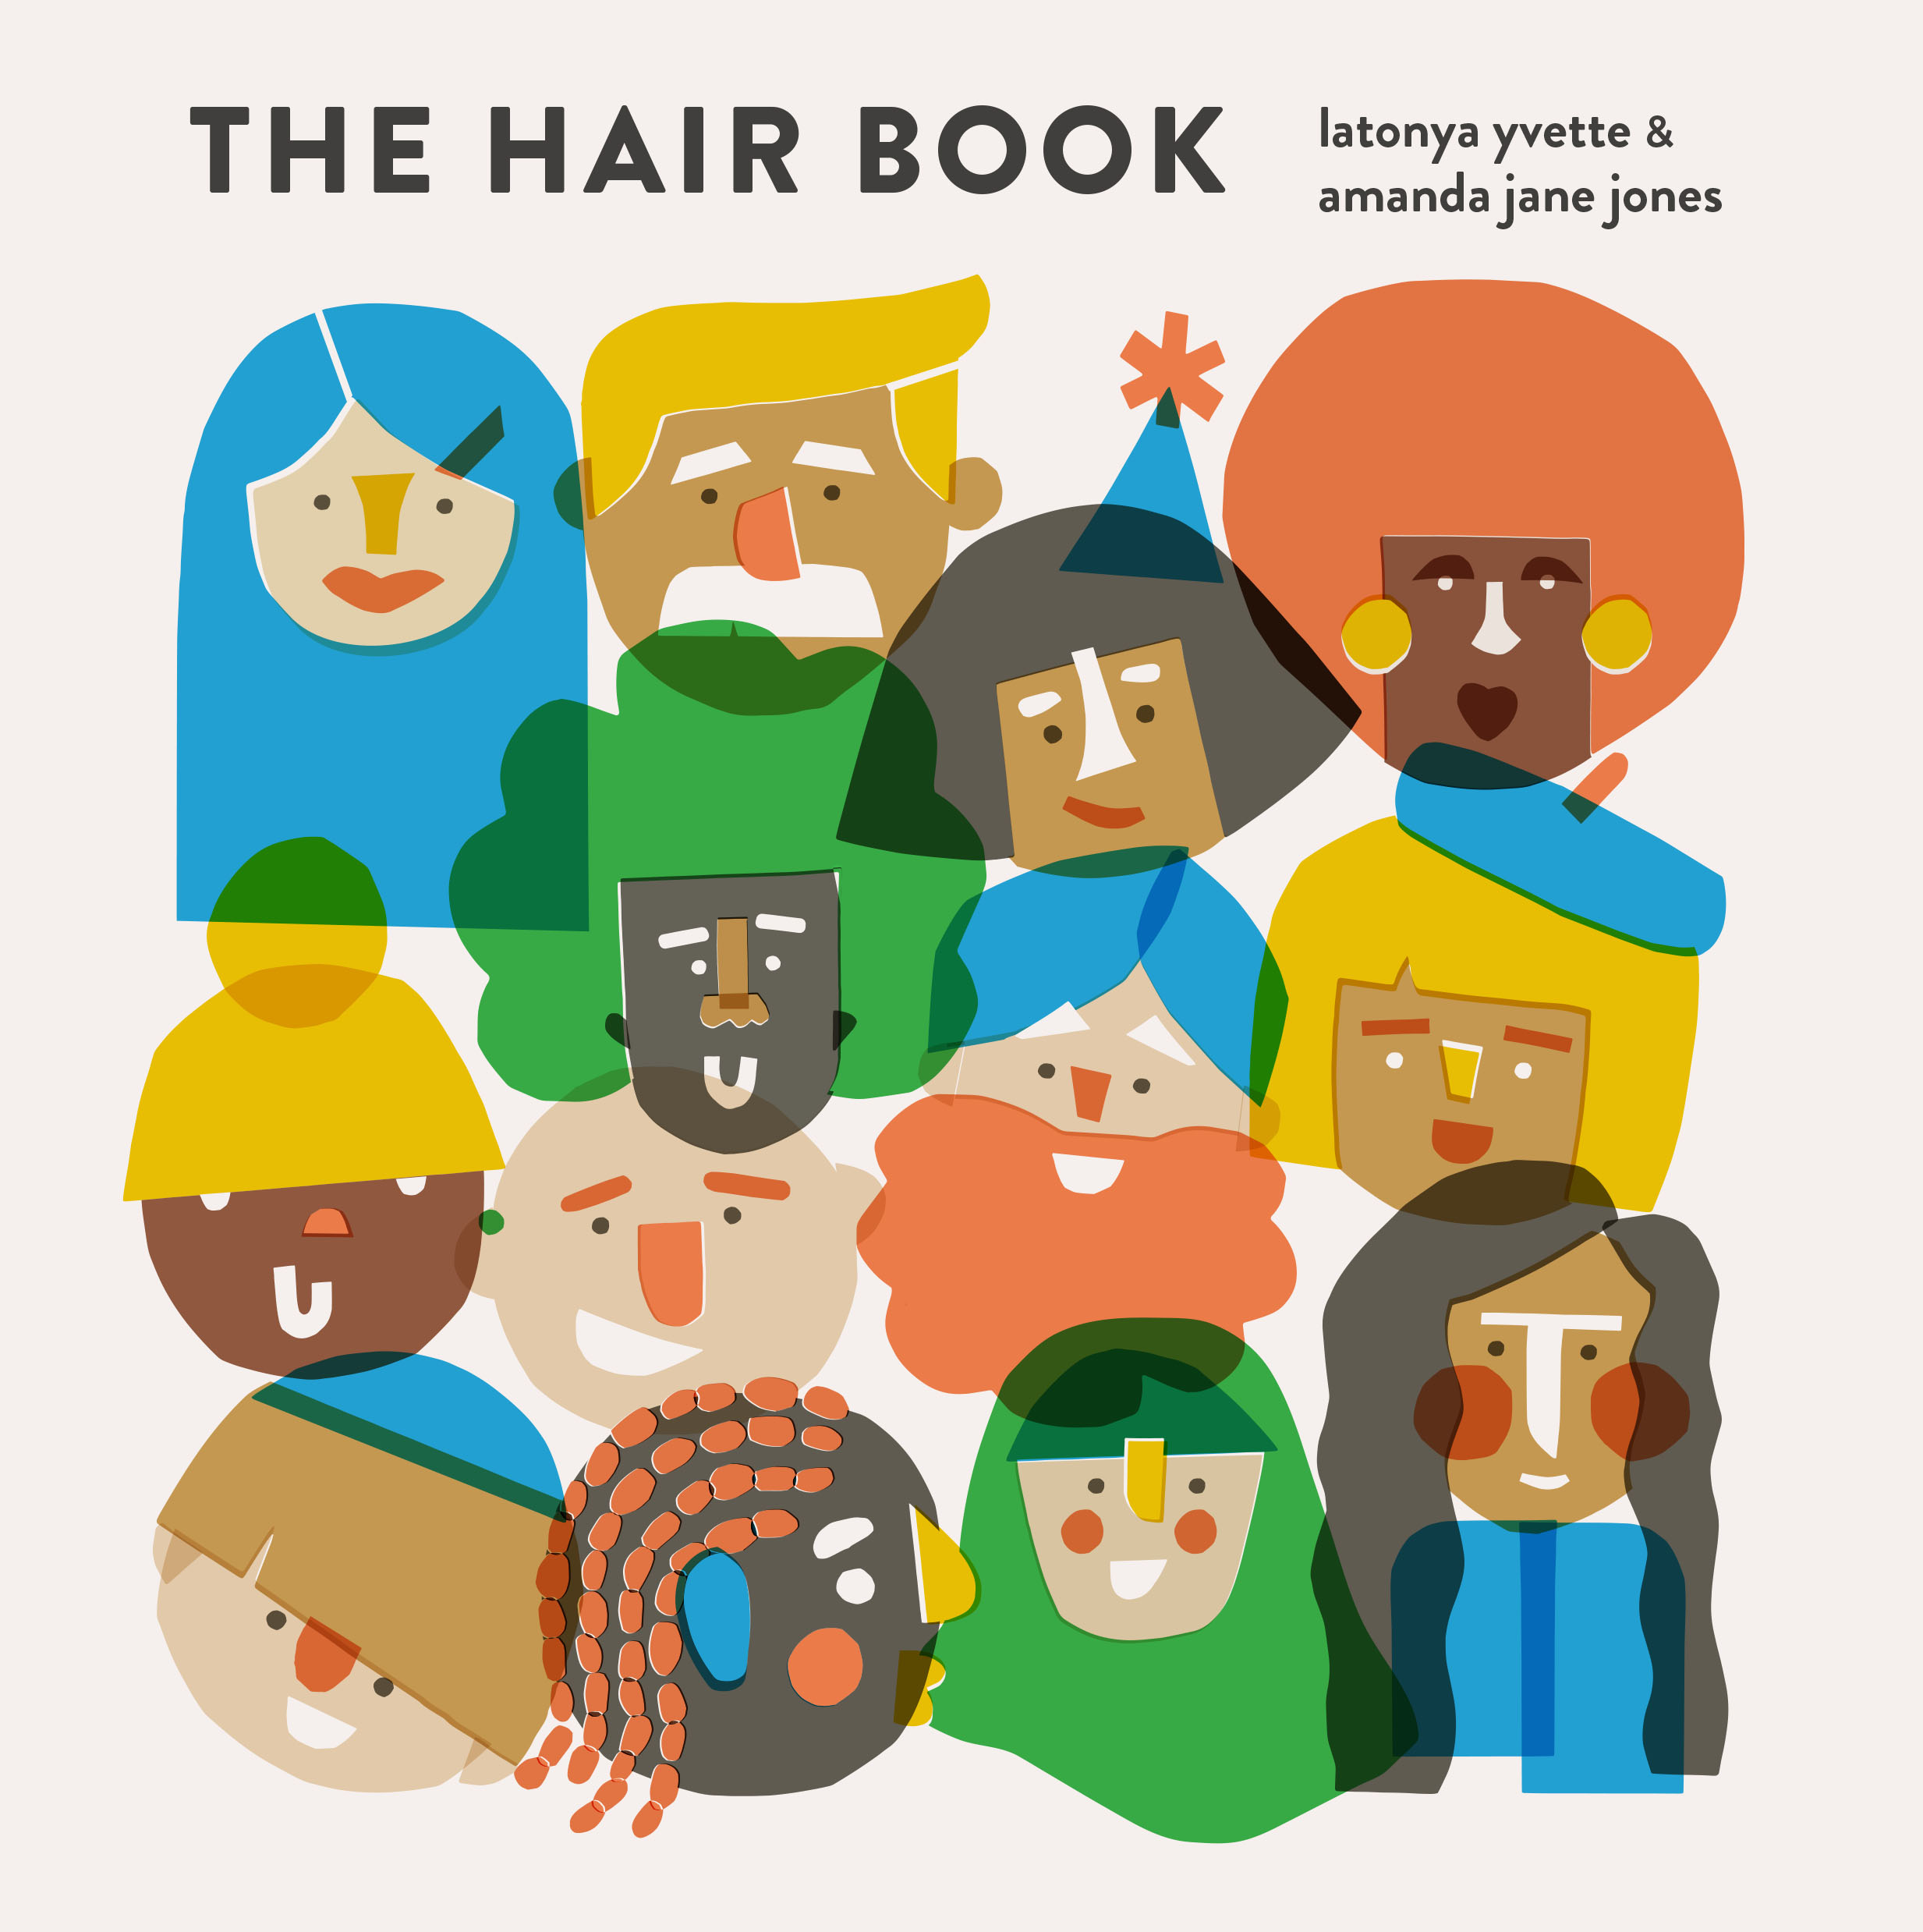 Celebrating Every Kind of Hair: Co-creator Amanda Jane Jones shares the inspiration behind THE HAIR BOOK